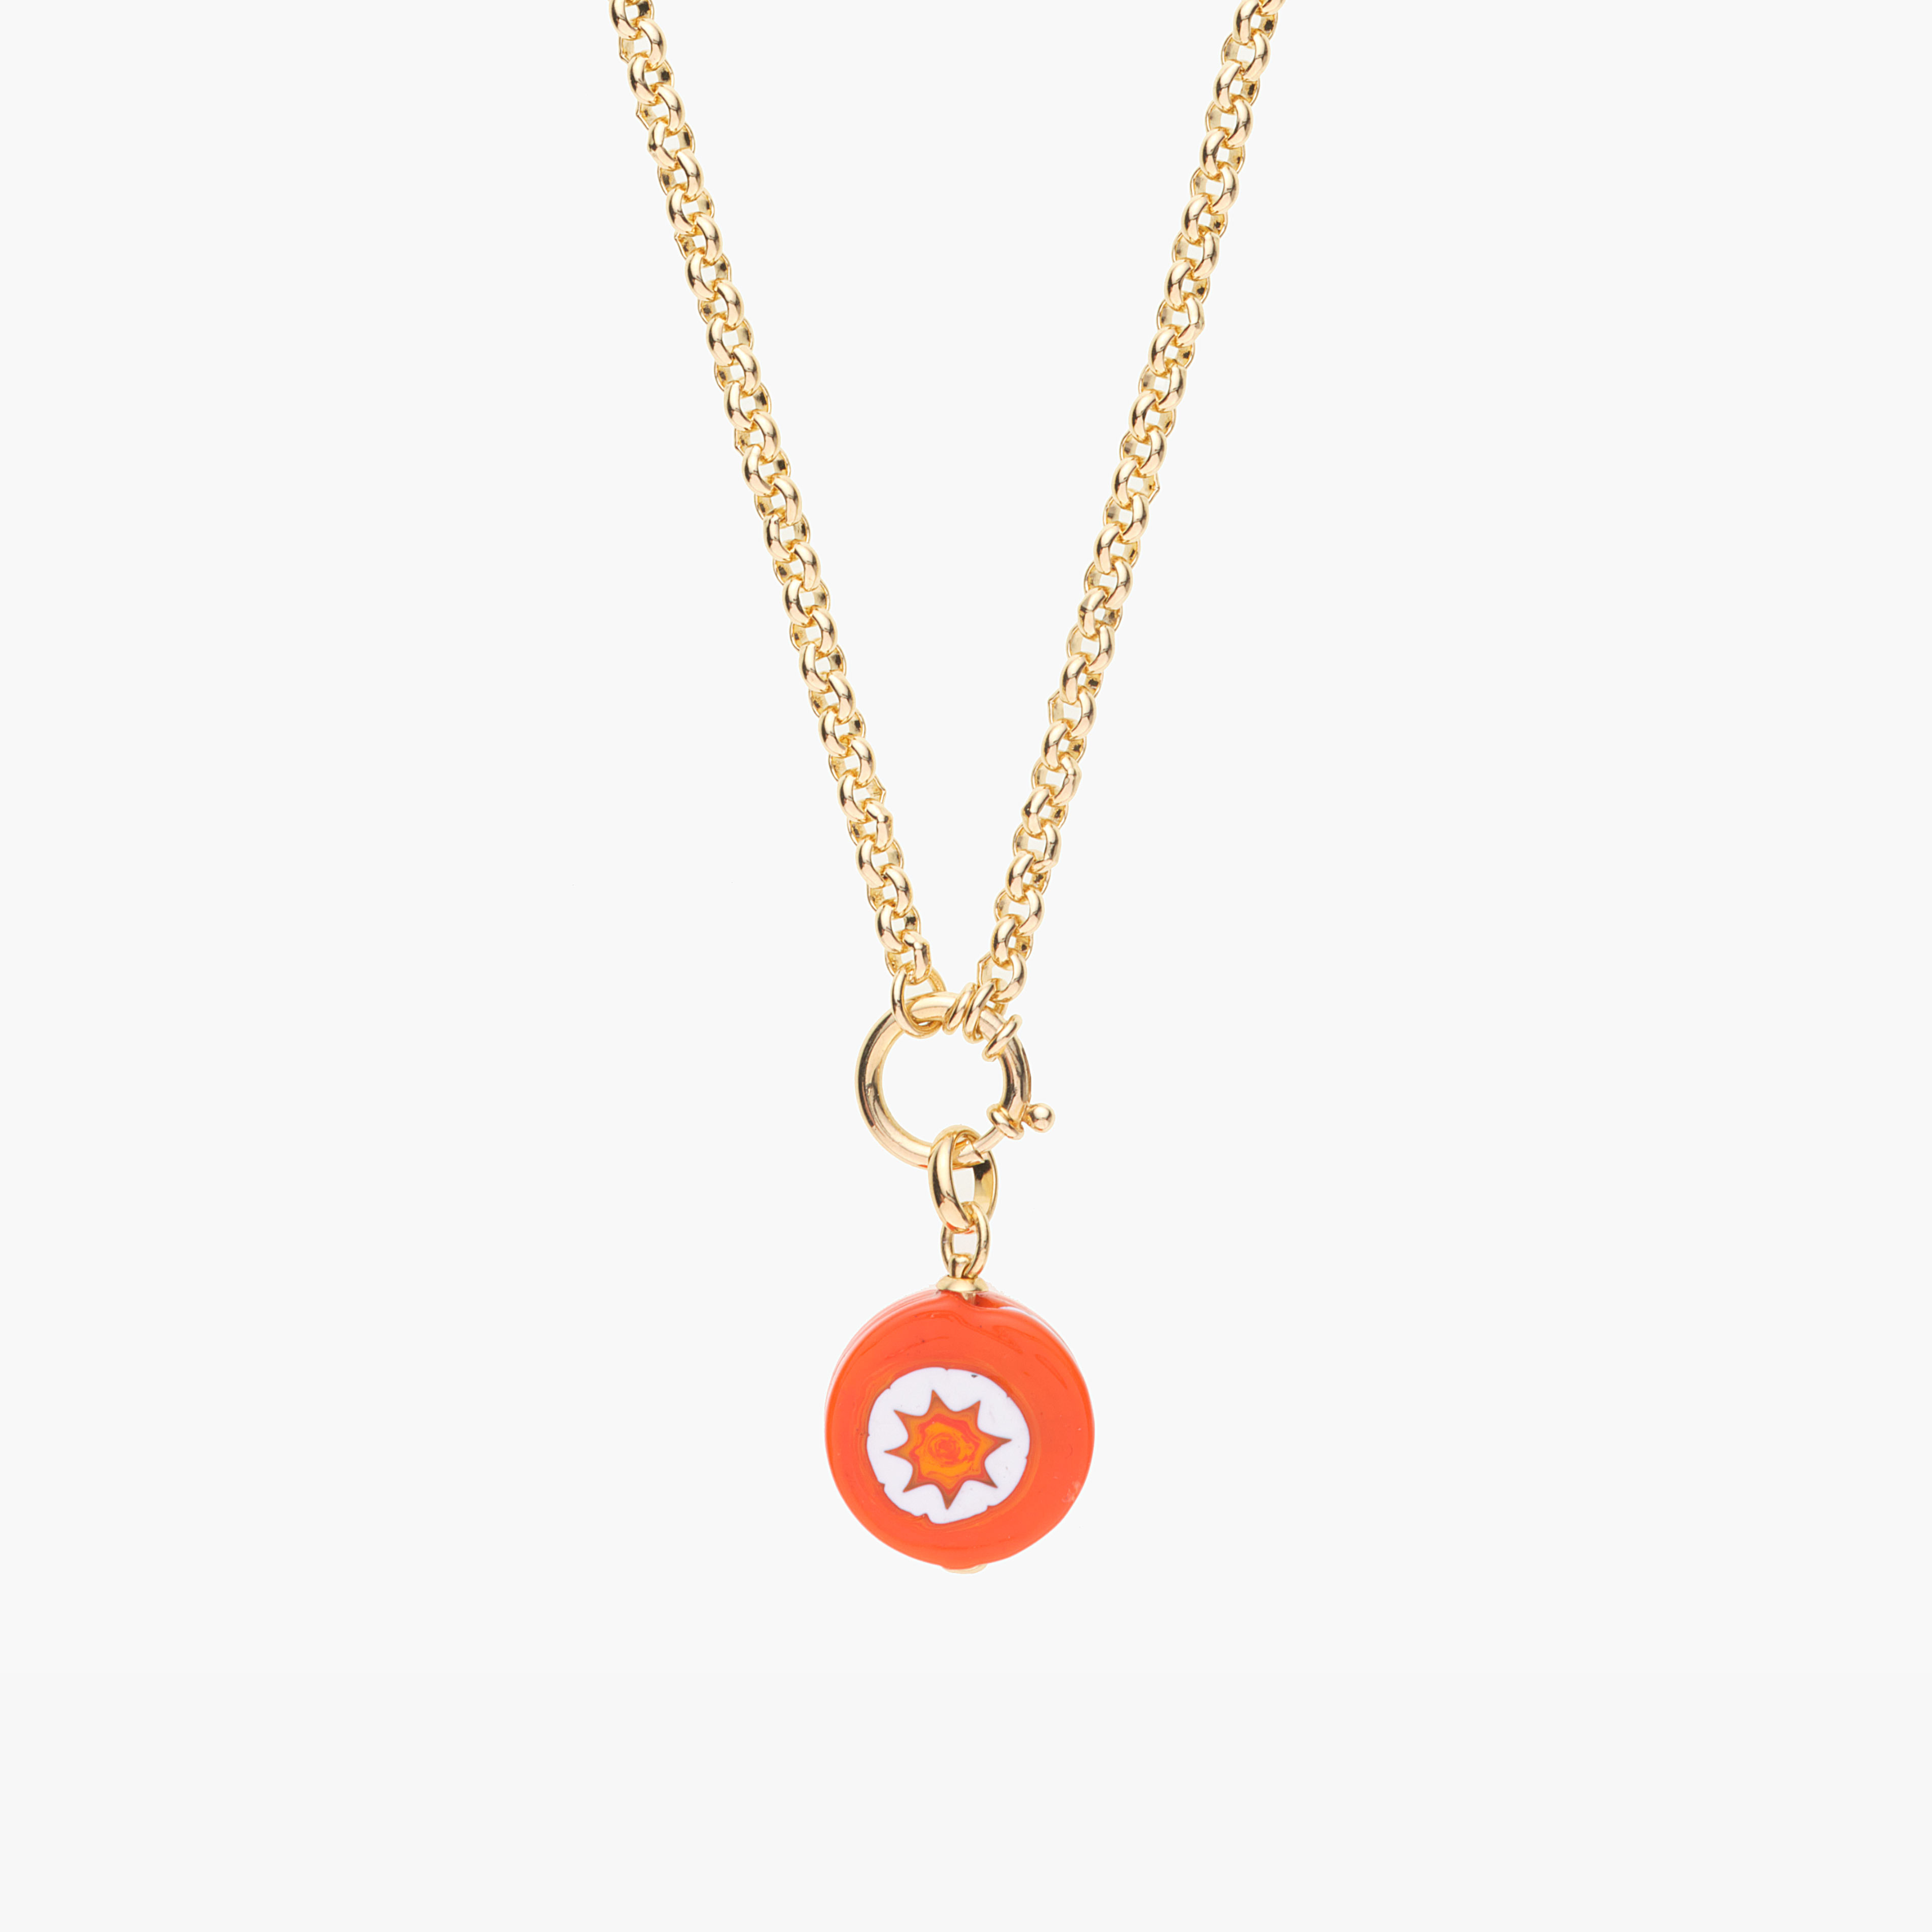 LIDO NECKLACE - Orange Star